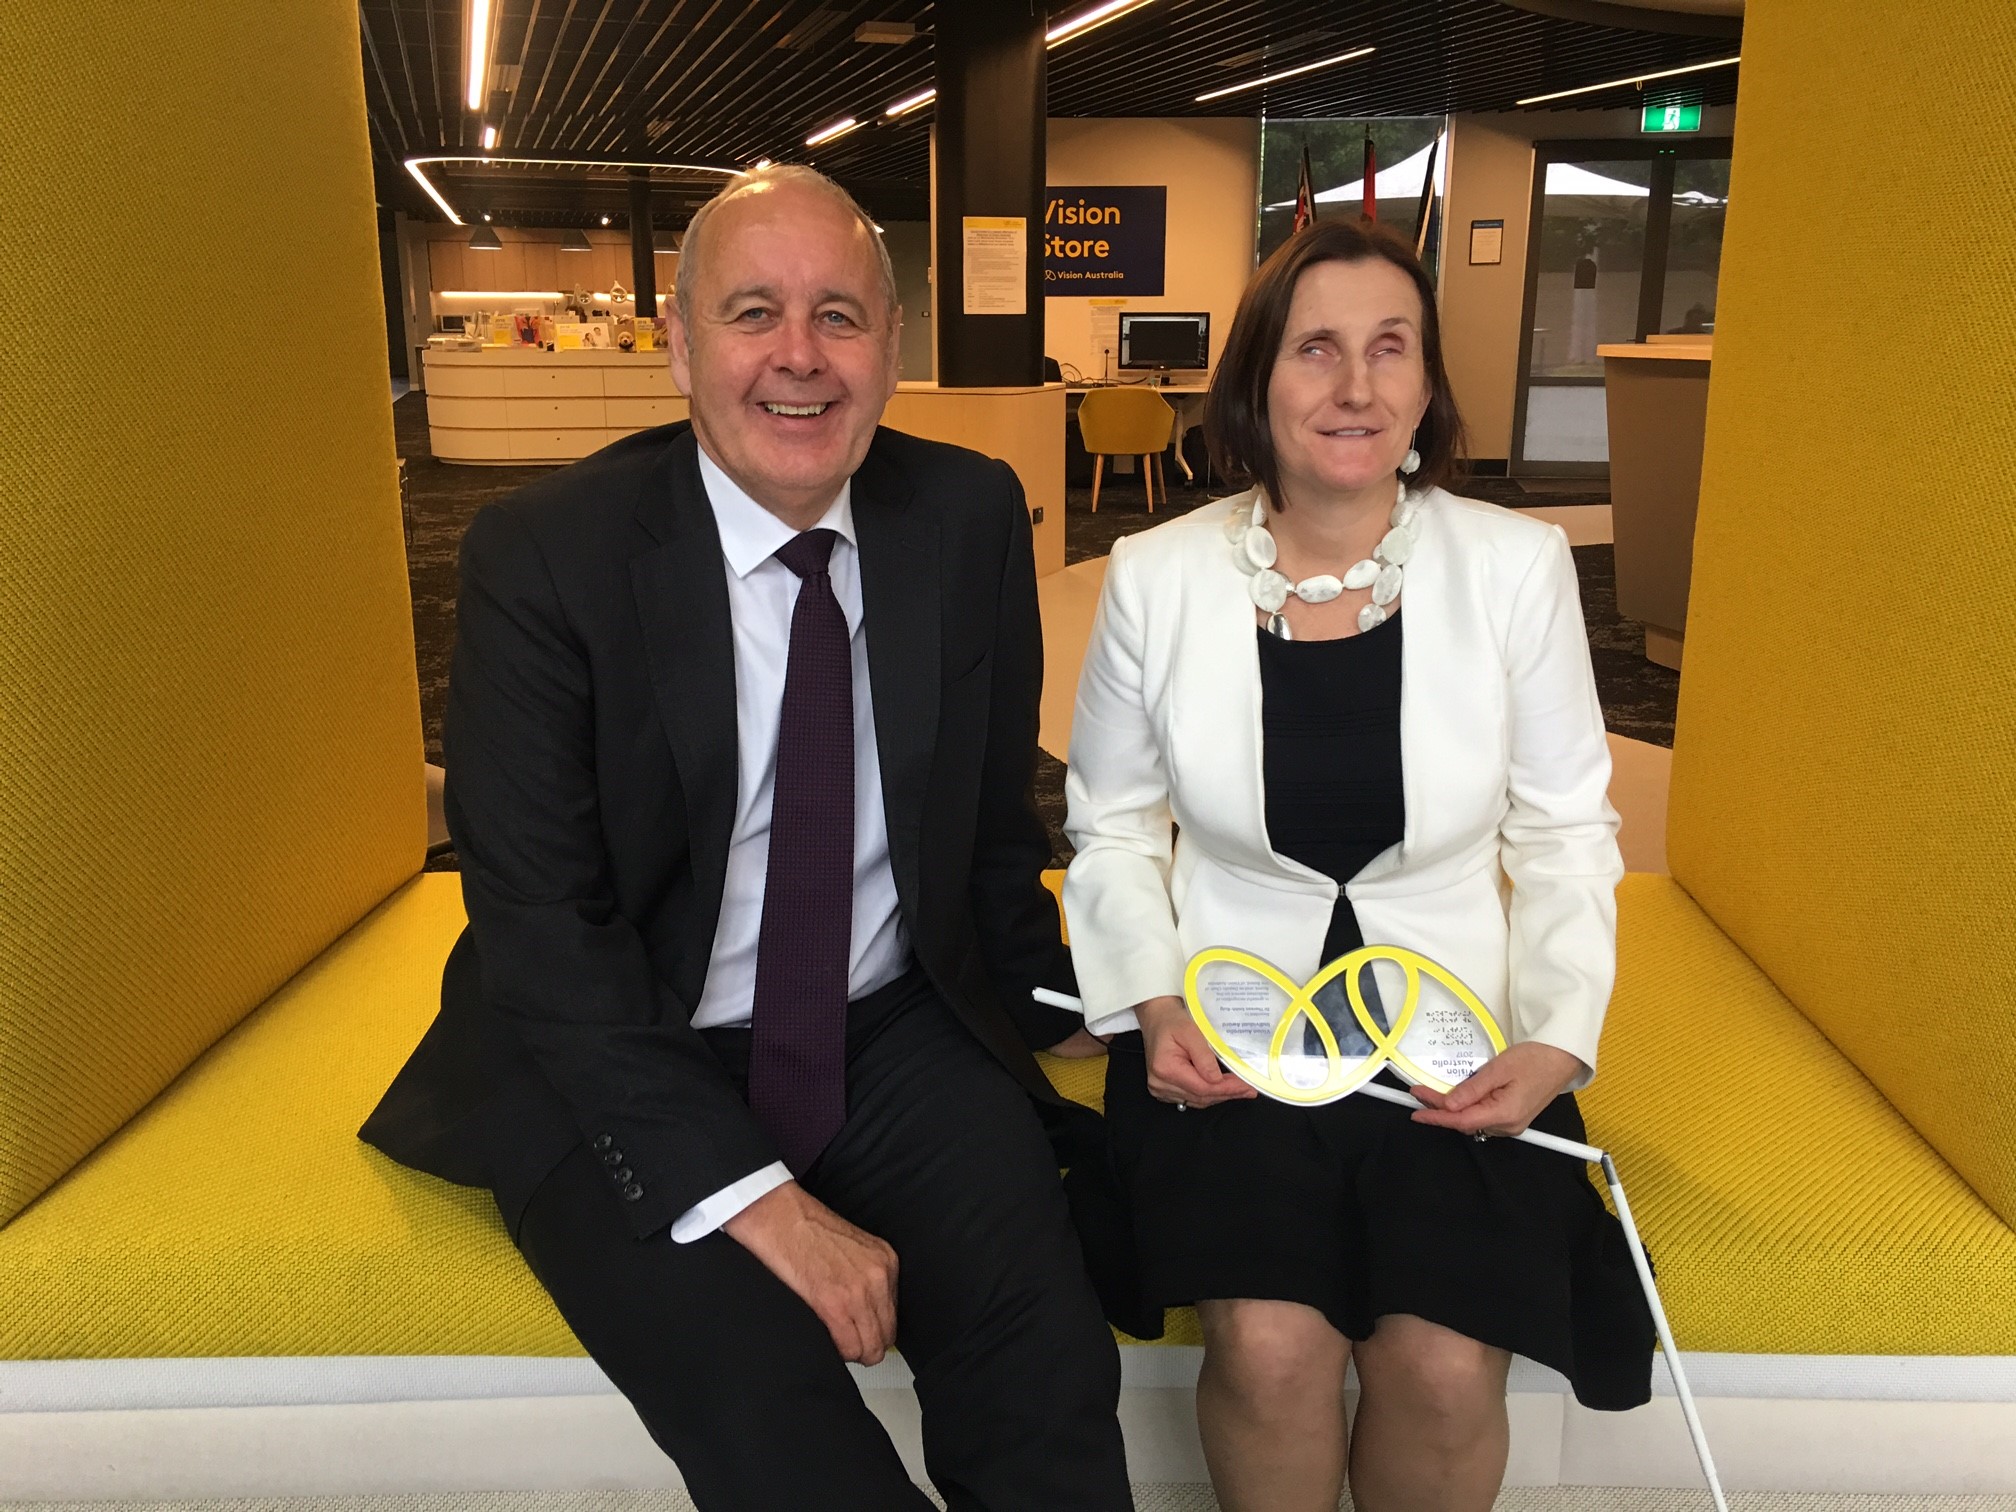 Vision Australia CEO Ron Hooton, left, with Theresa Smith-Ruig and her Vision Australia Award.